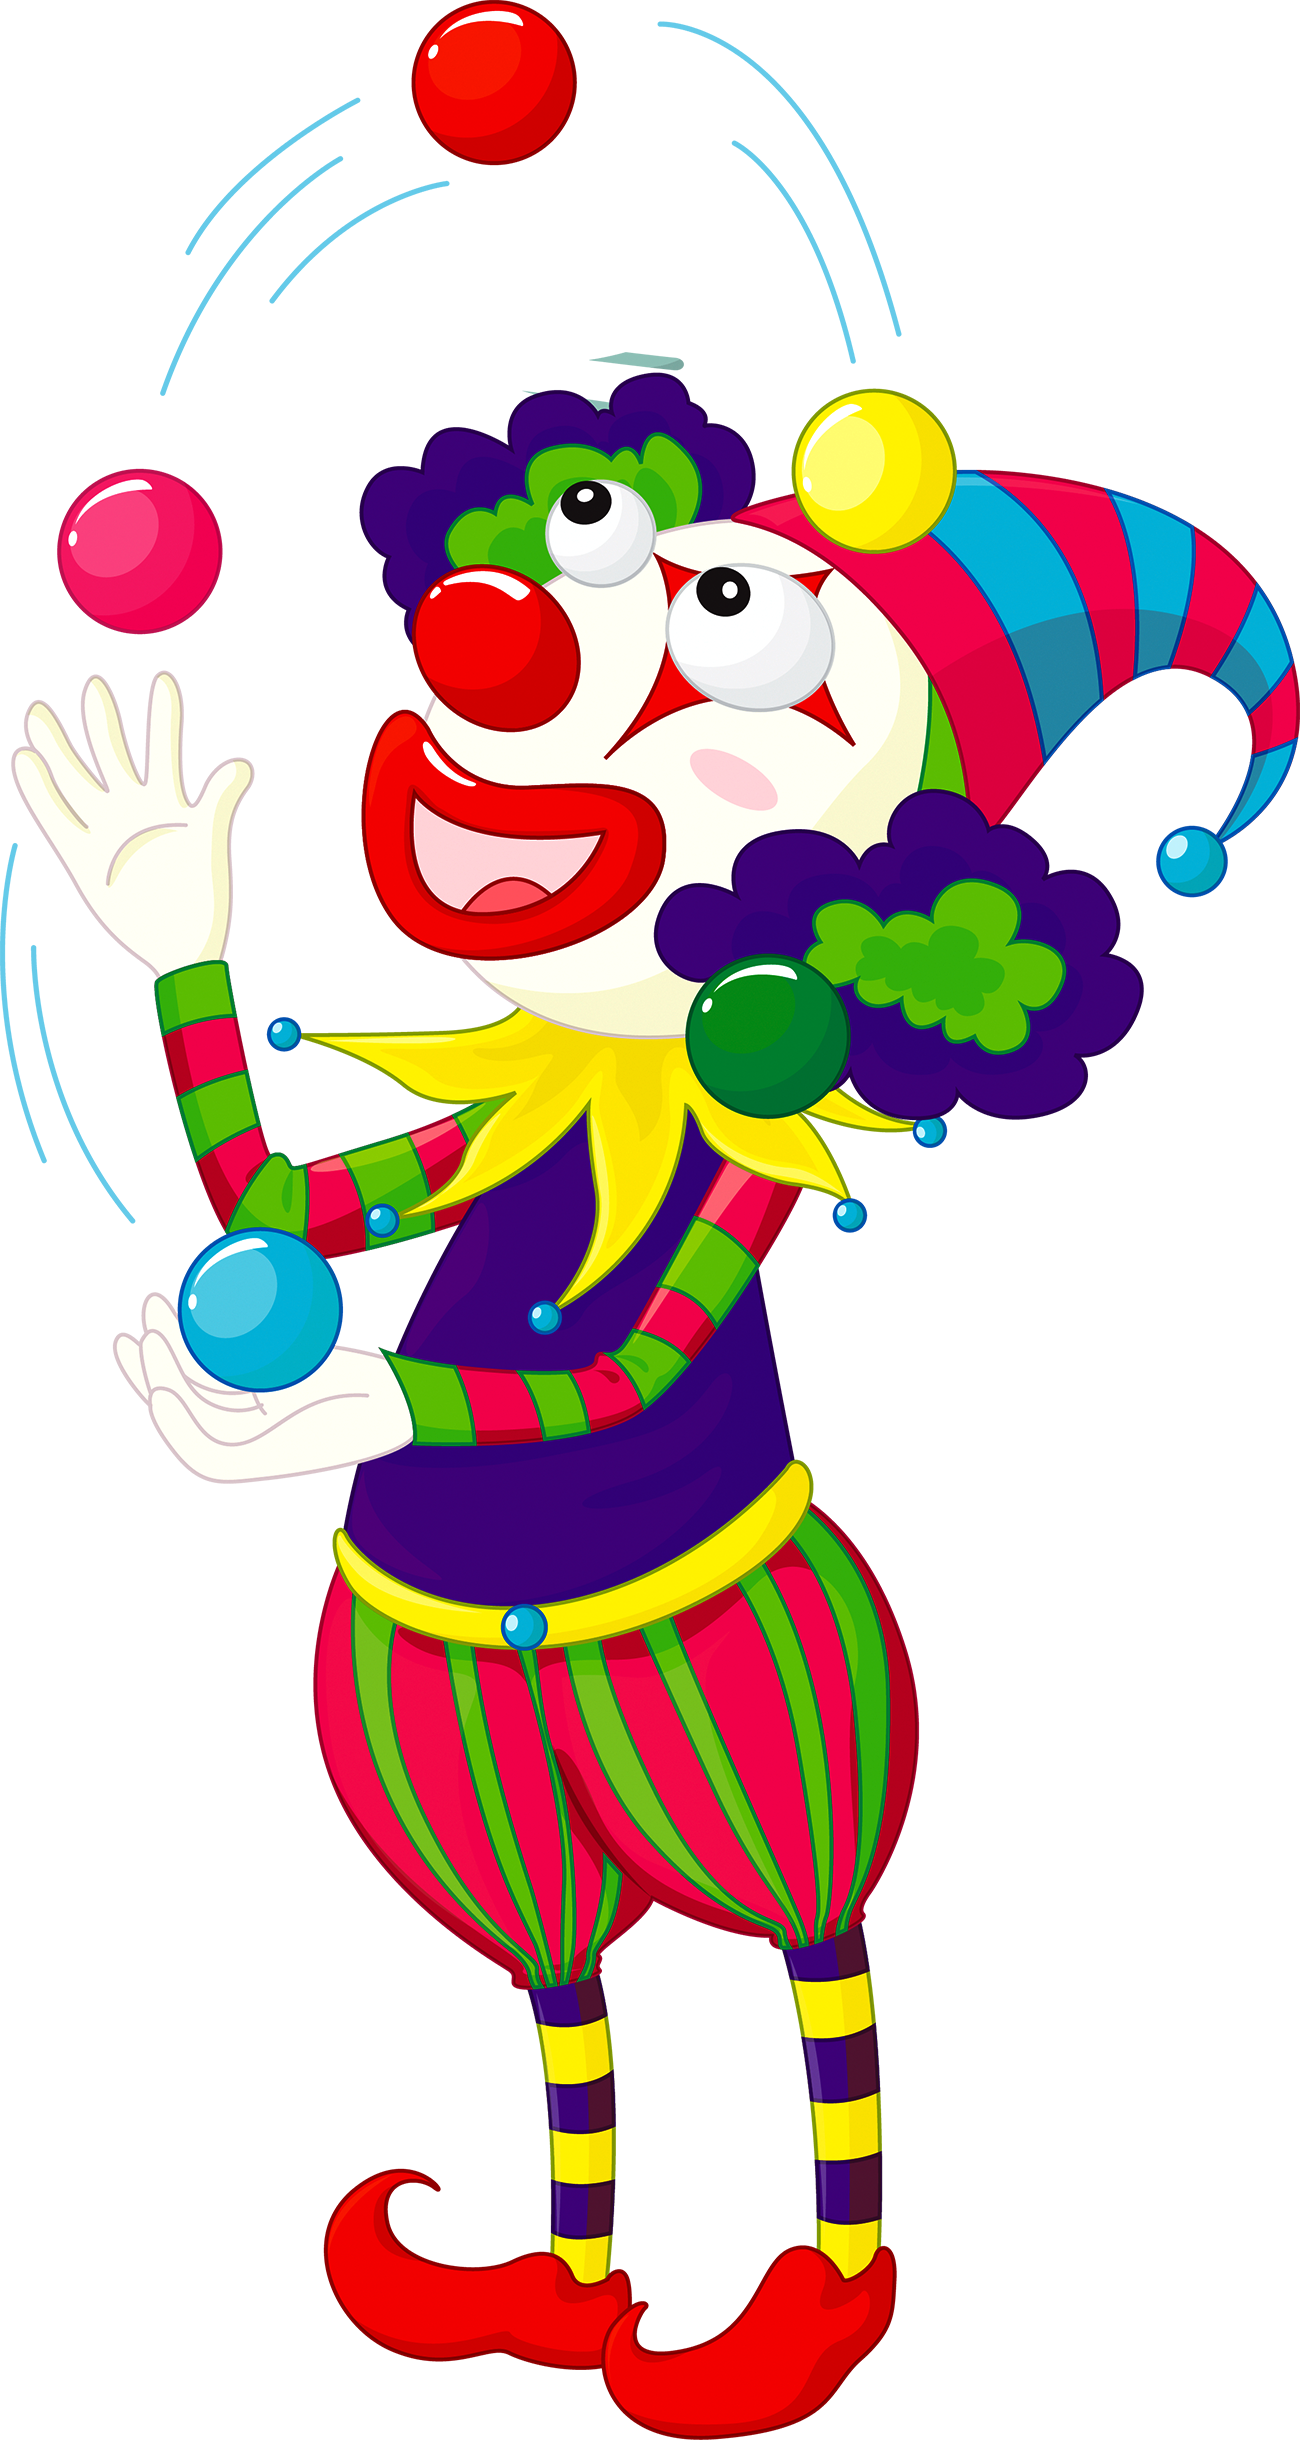 Clown Circus Juggling Illustration - Clown Circus Juggling Illustration (1300x2440)